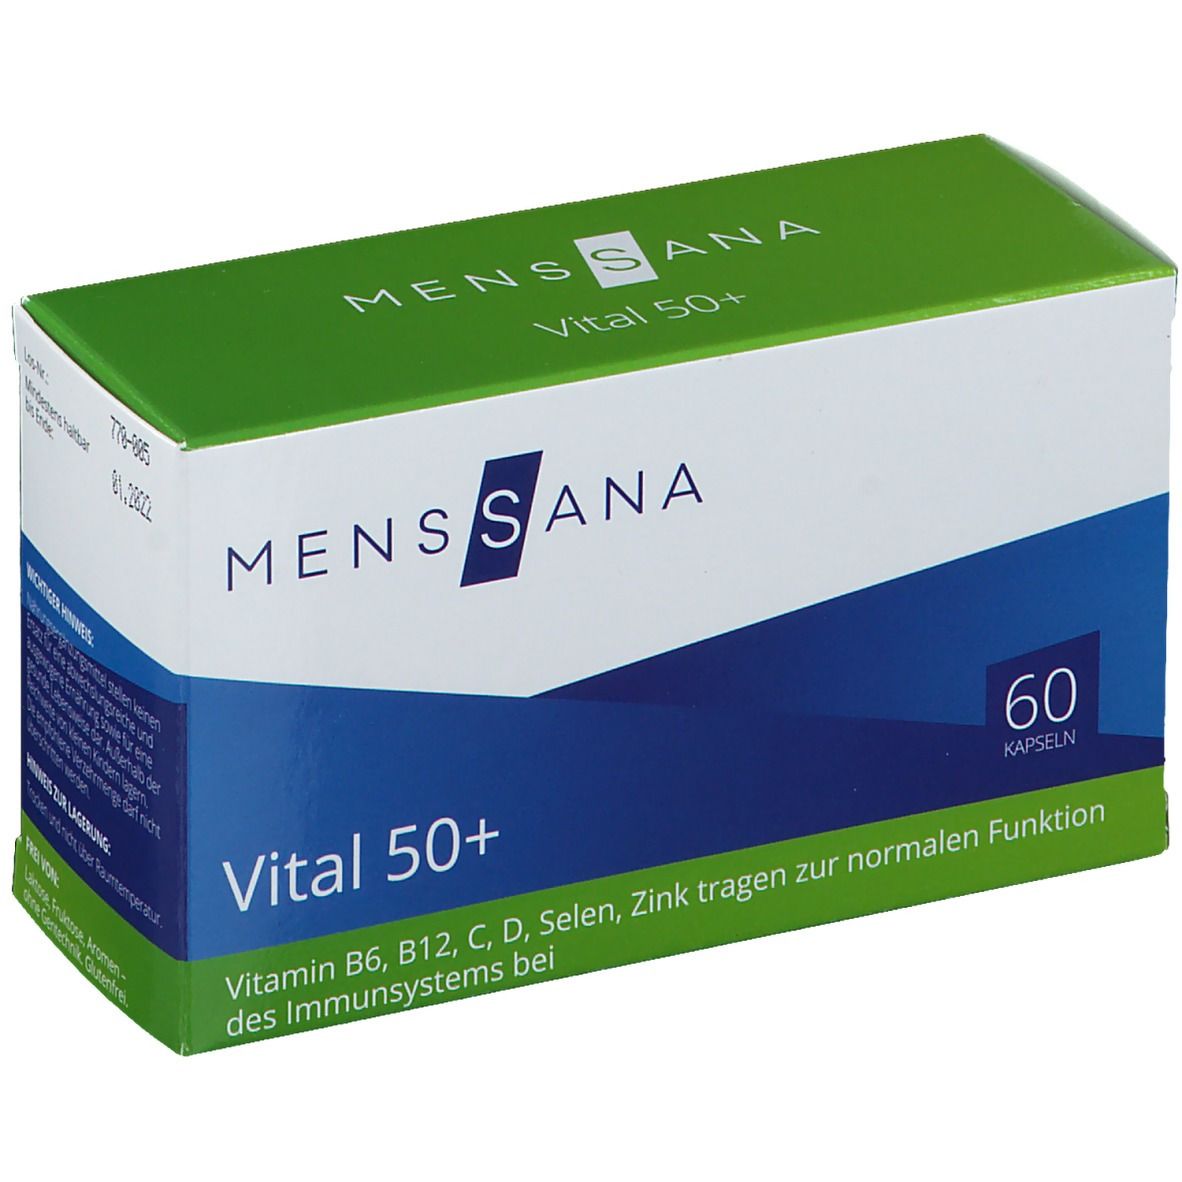 MensSana Vital 50+